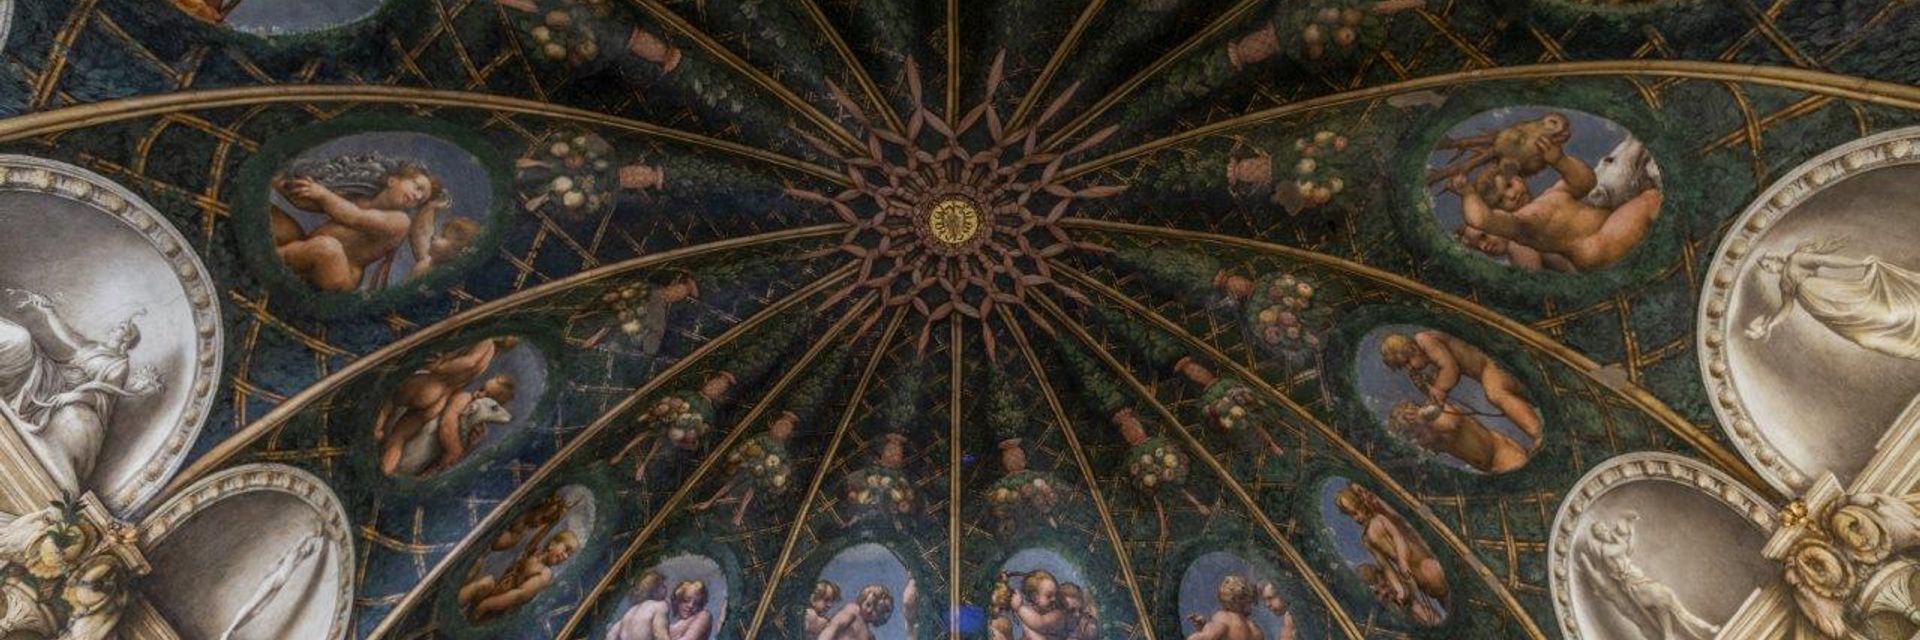 St. Pauls Kammer